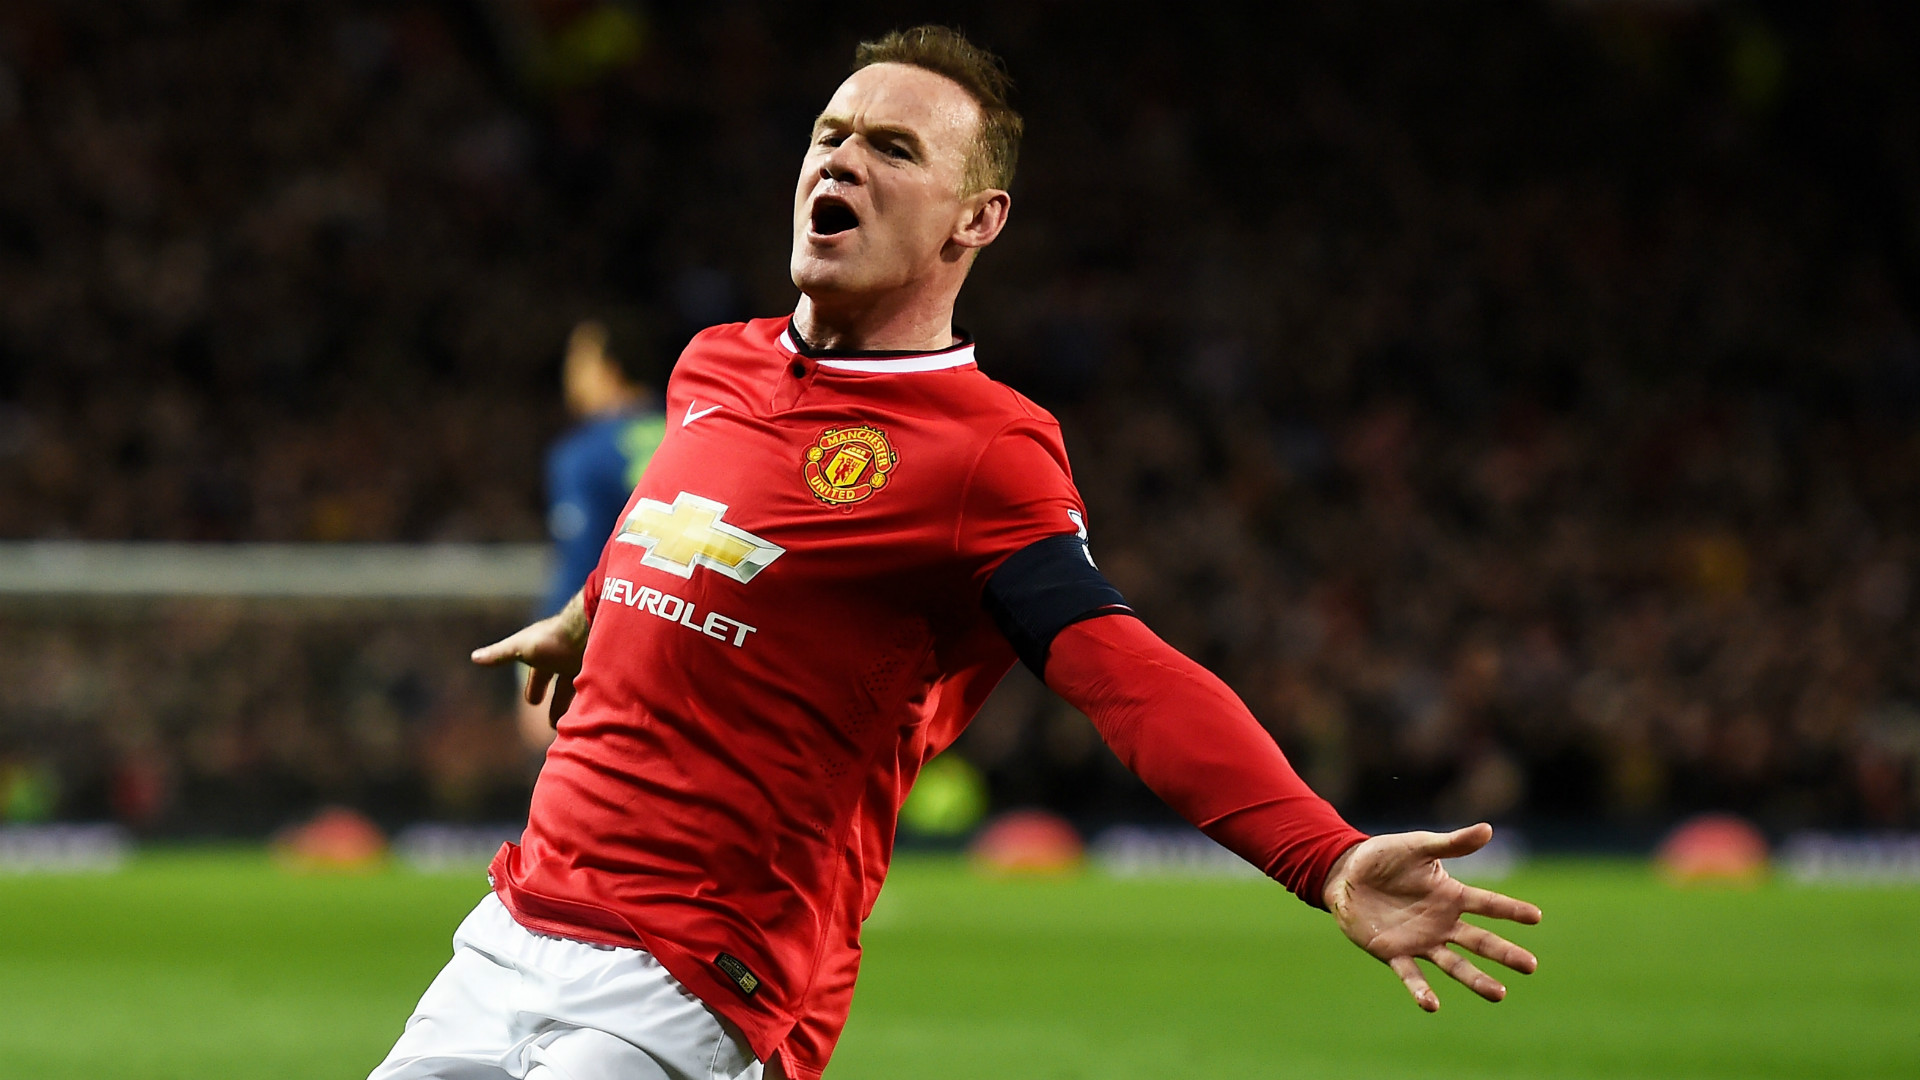 Solskjaer: Everyone appreciates what Wayne Rooney did for Manchester United - Bóng Đá